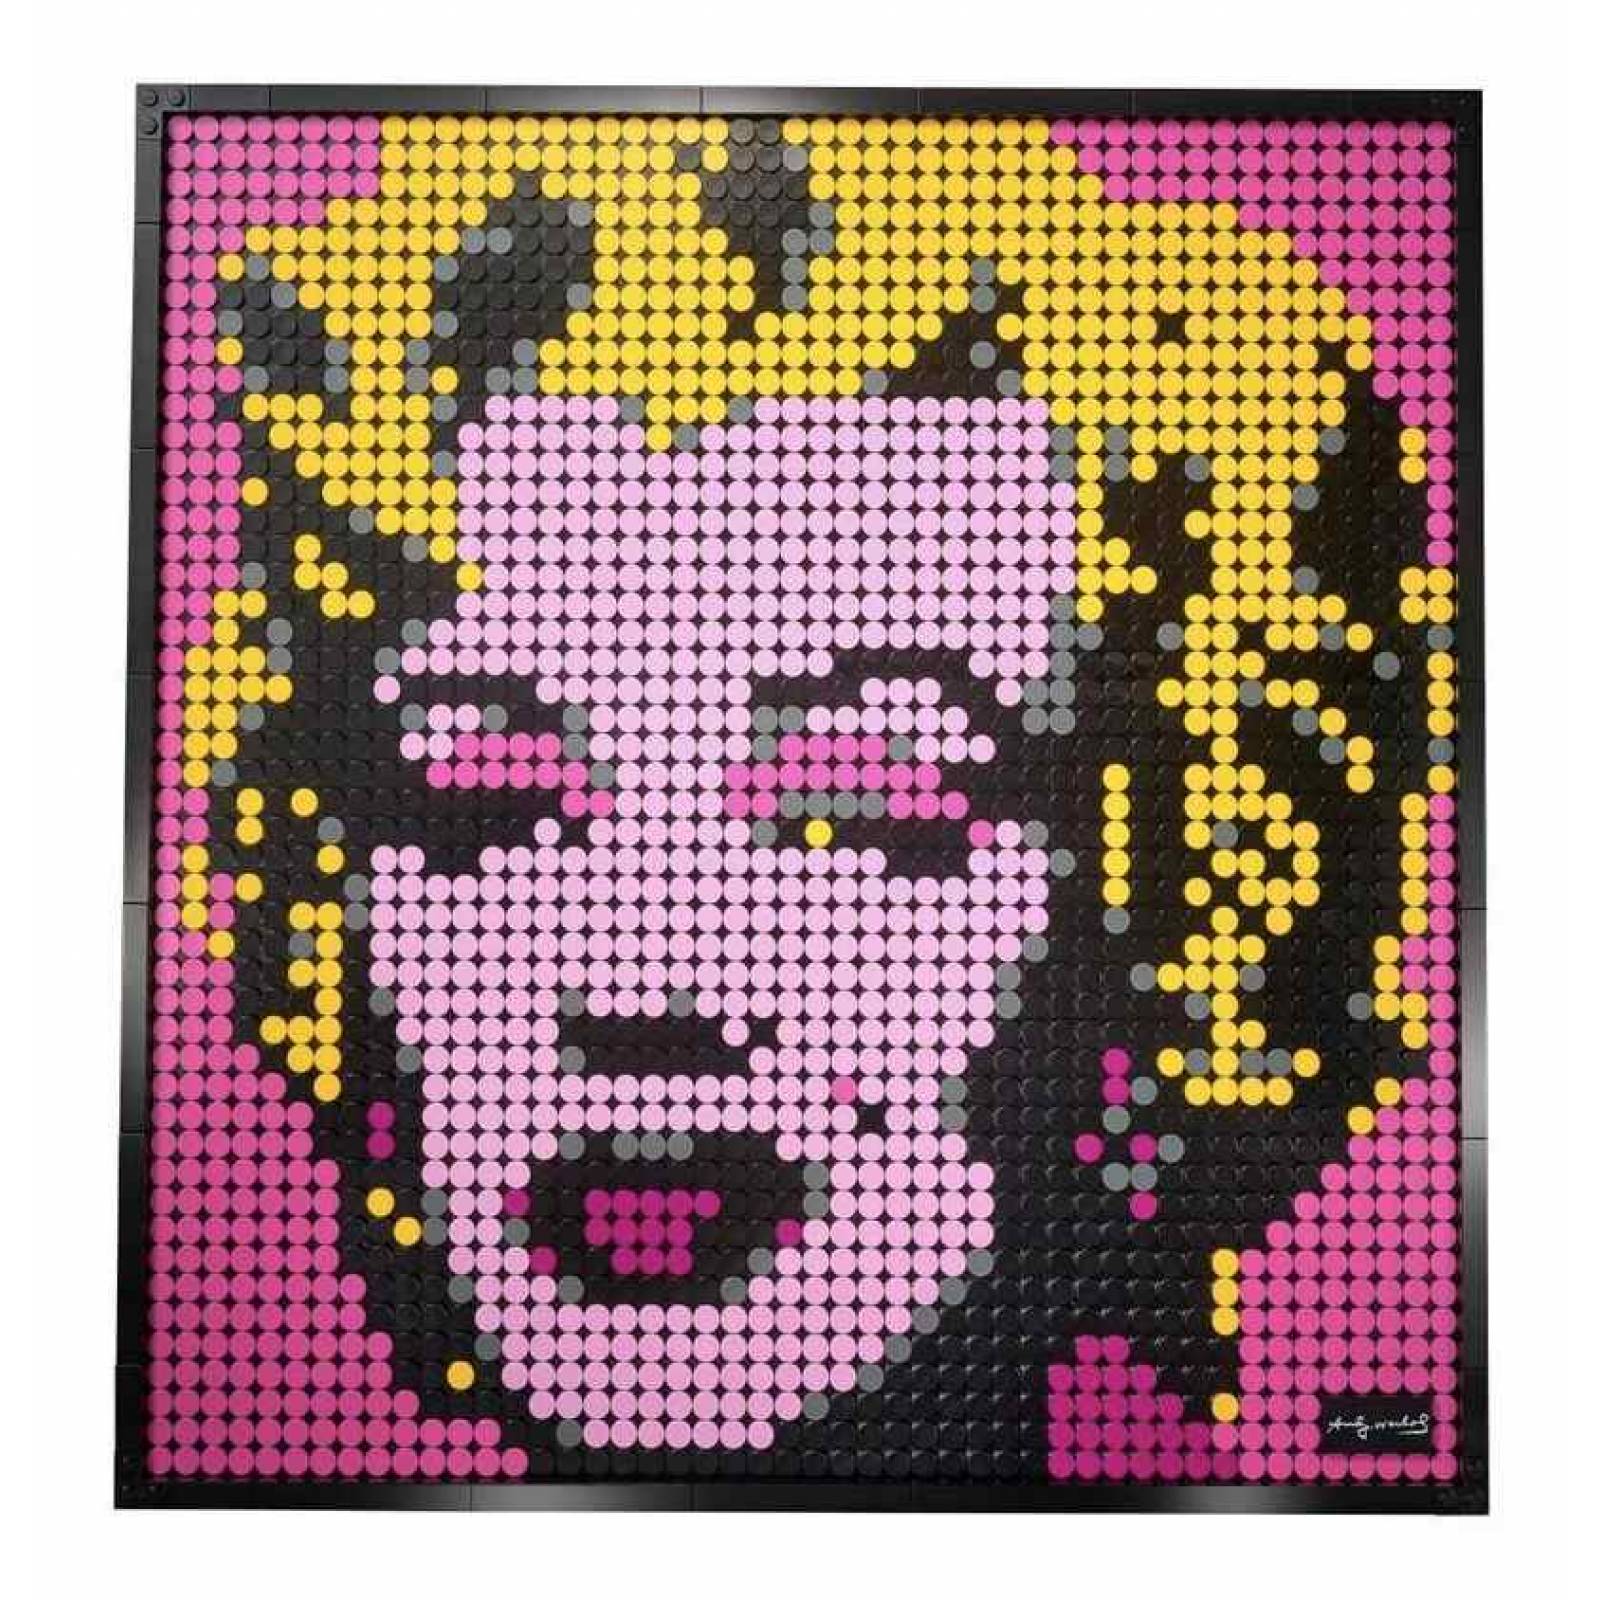 Lego 31197 Andy Warhol's Marilyn Monroe